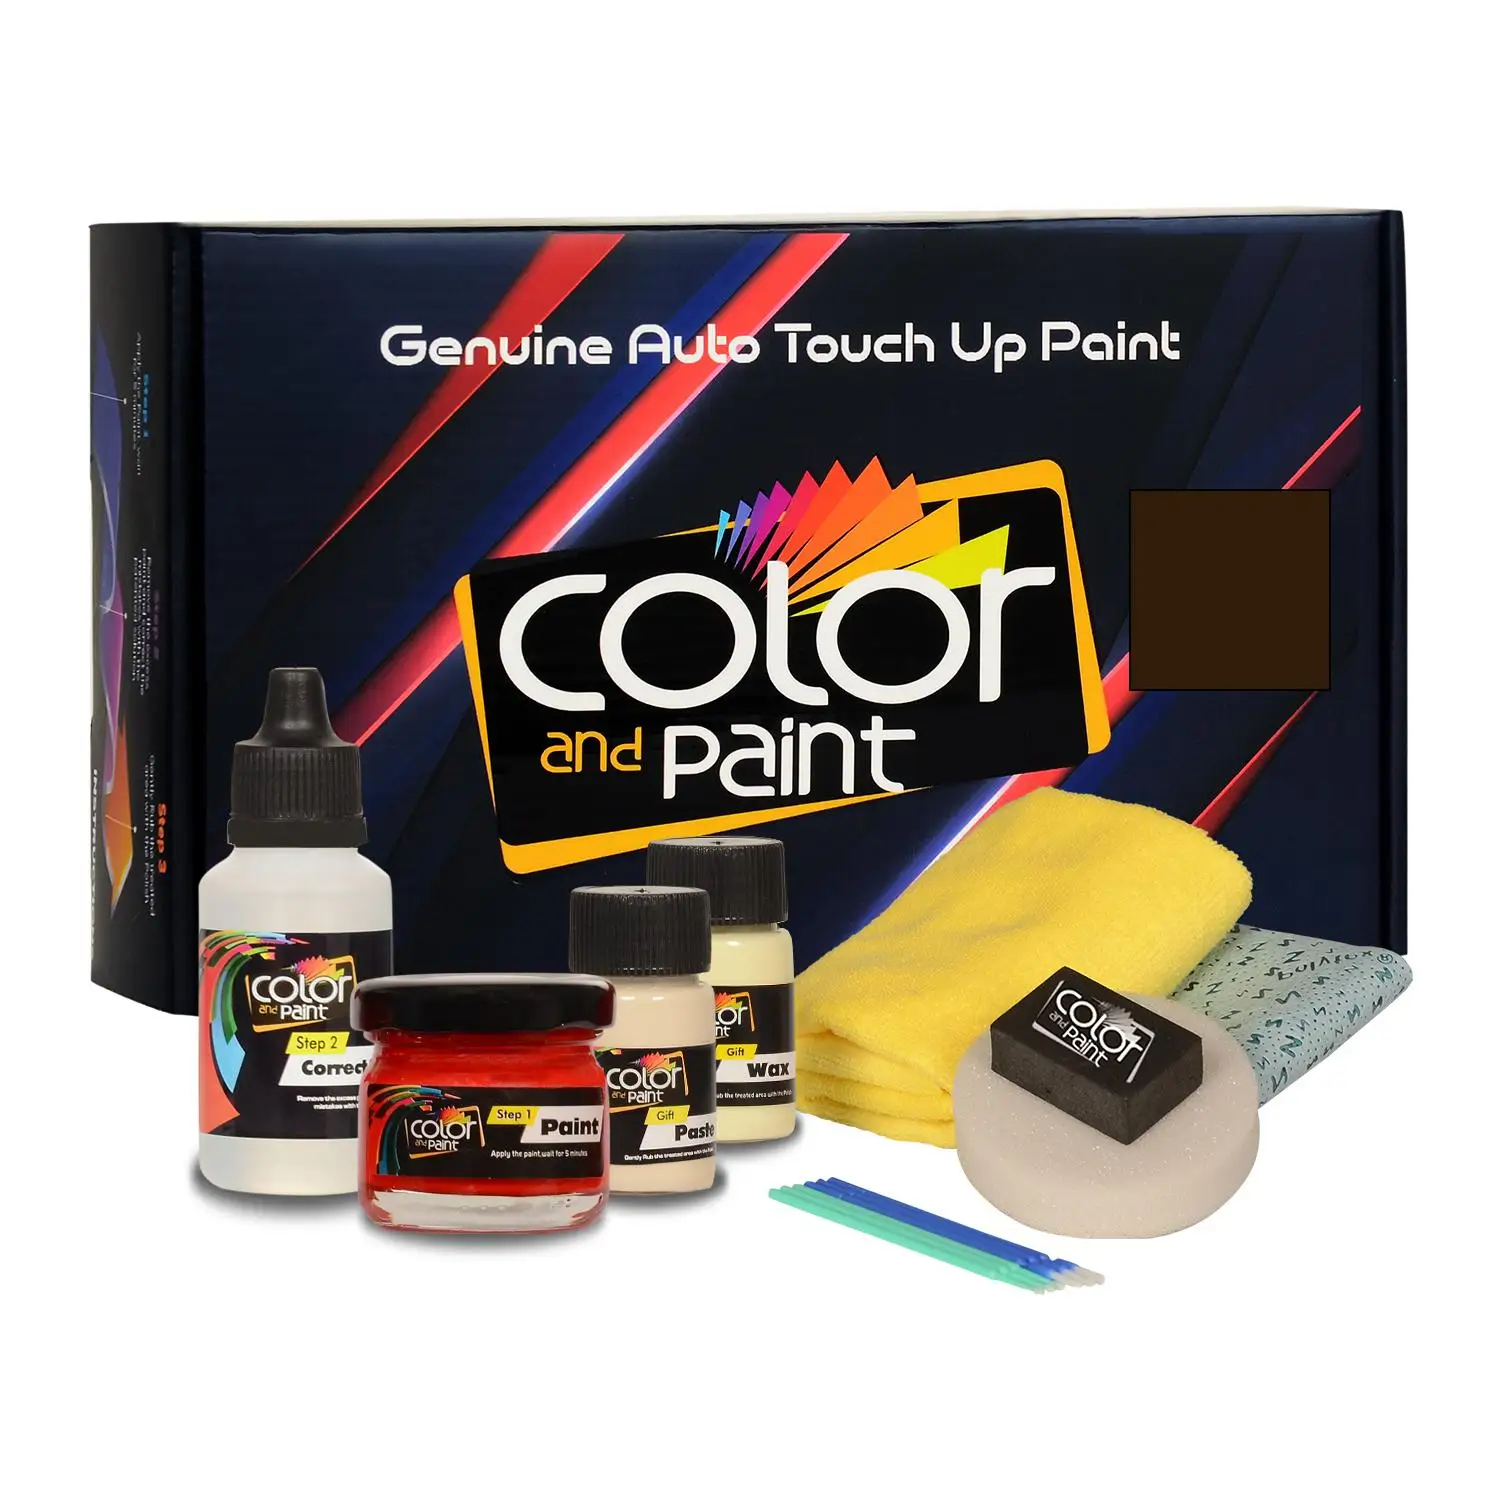 

Color and Paint compatible with Porsche Automotive Touch Up Paint - OLIVE - 3910 - Basic Care